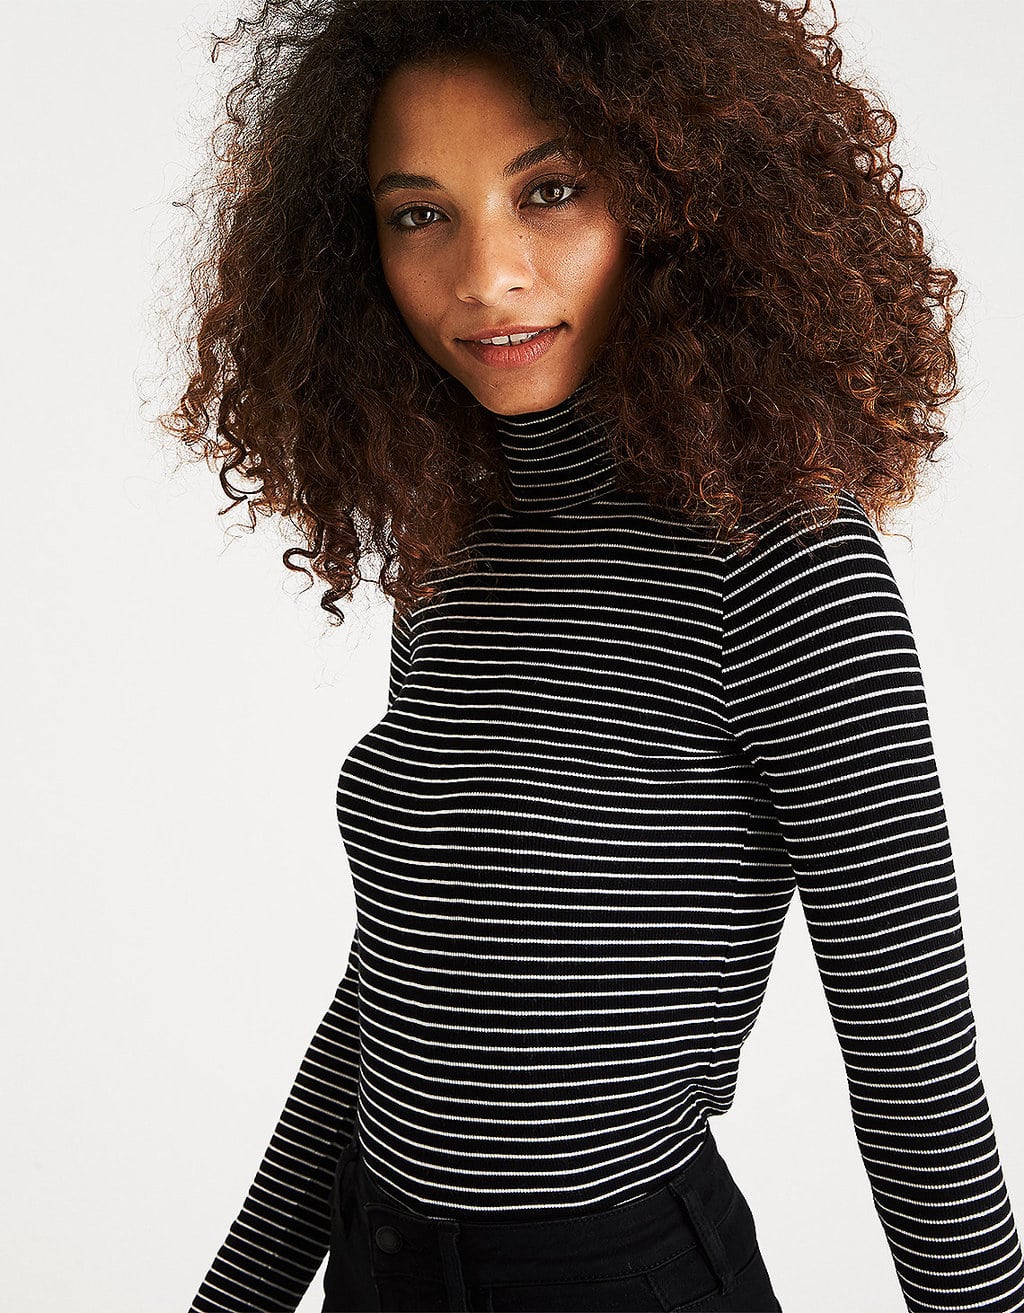 Model wearing AE black striped sweater.